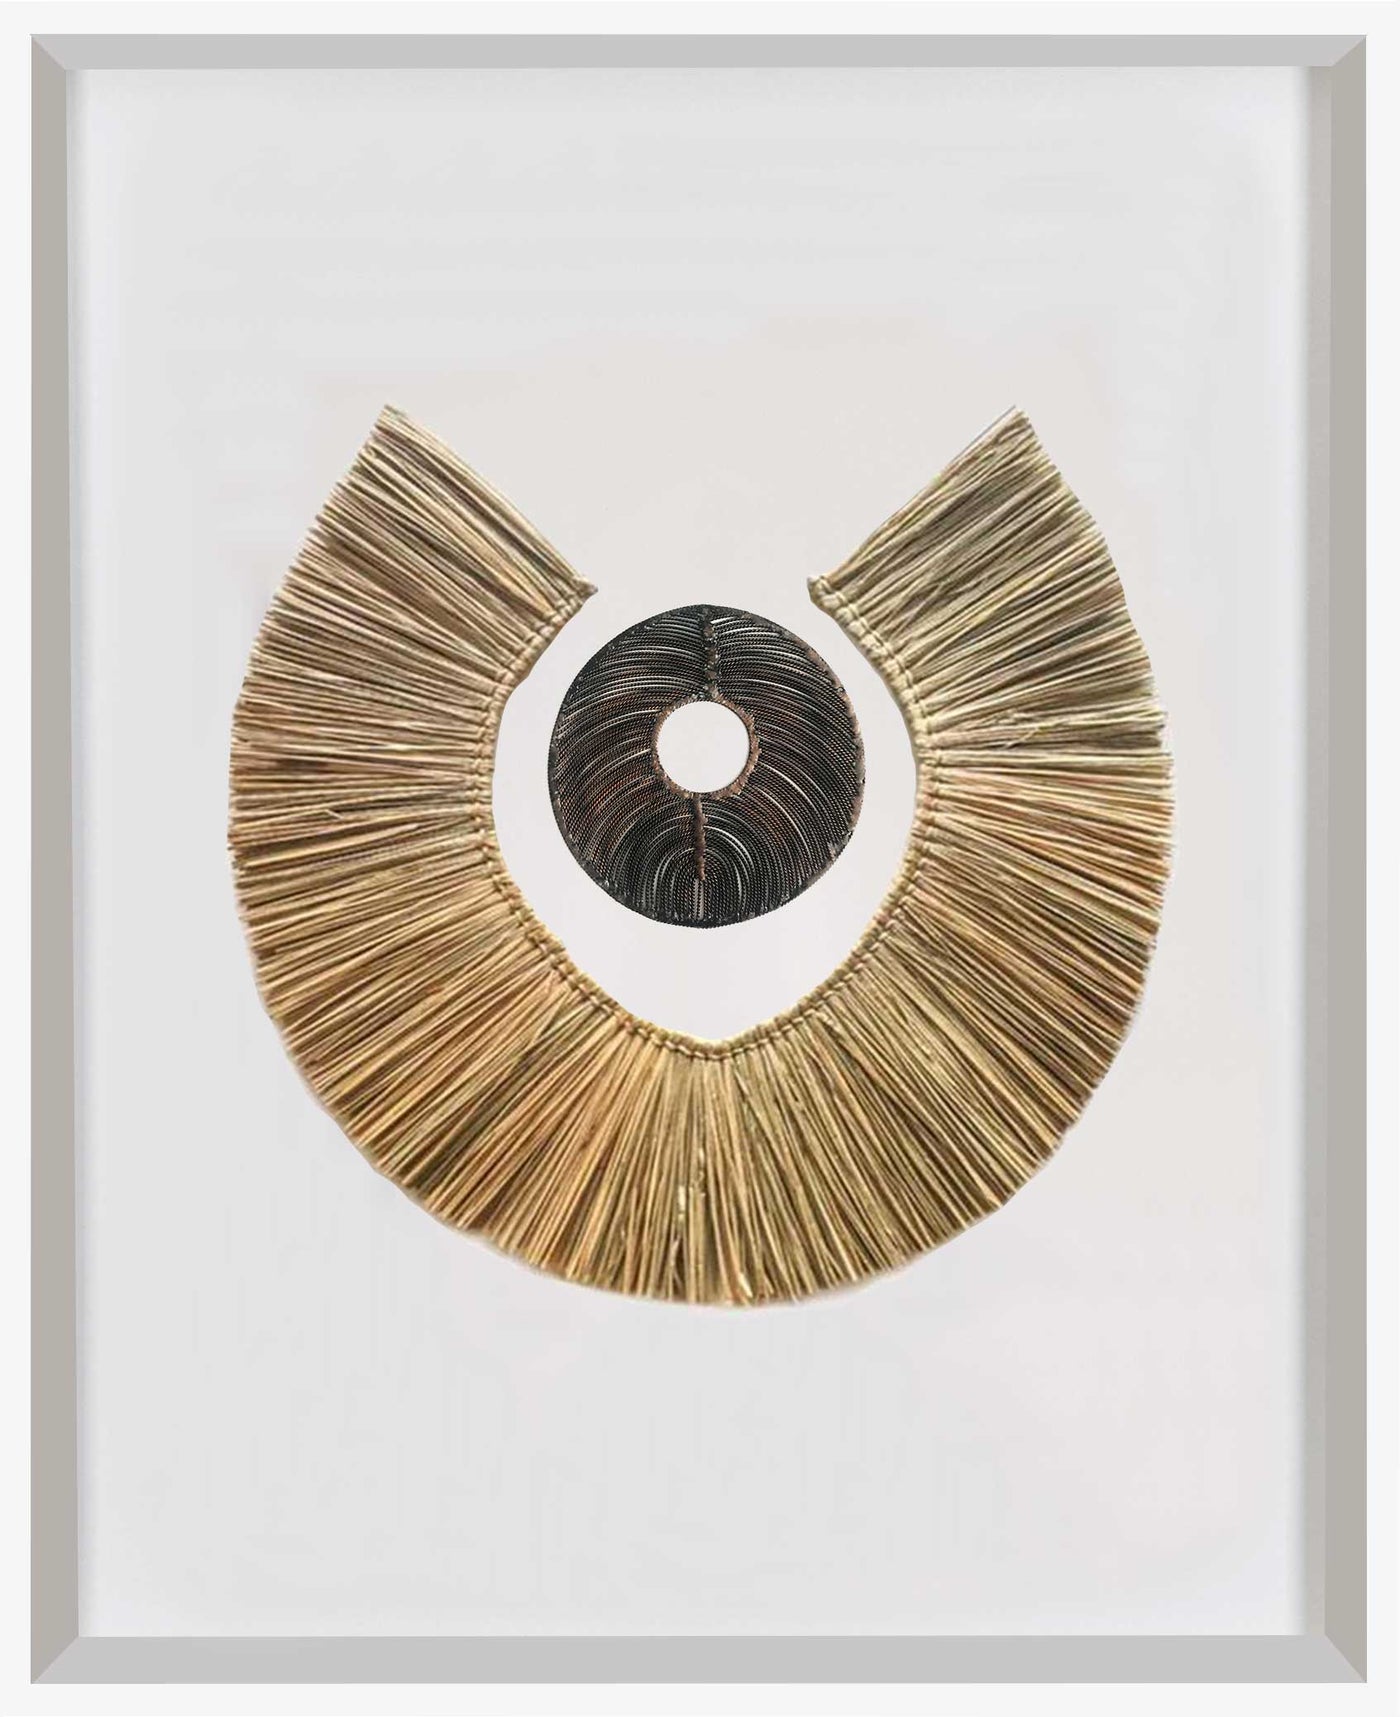 African Disc Copper & Grass Ring Artwork 67 x 85 cm